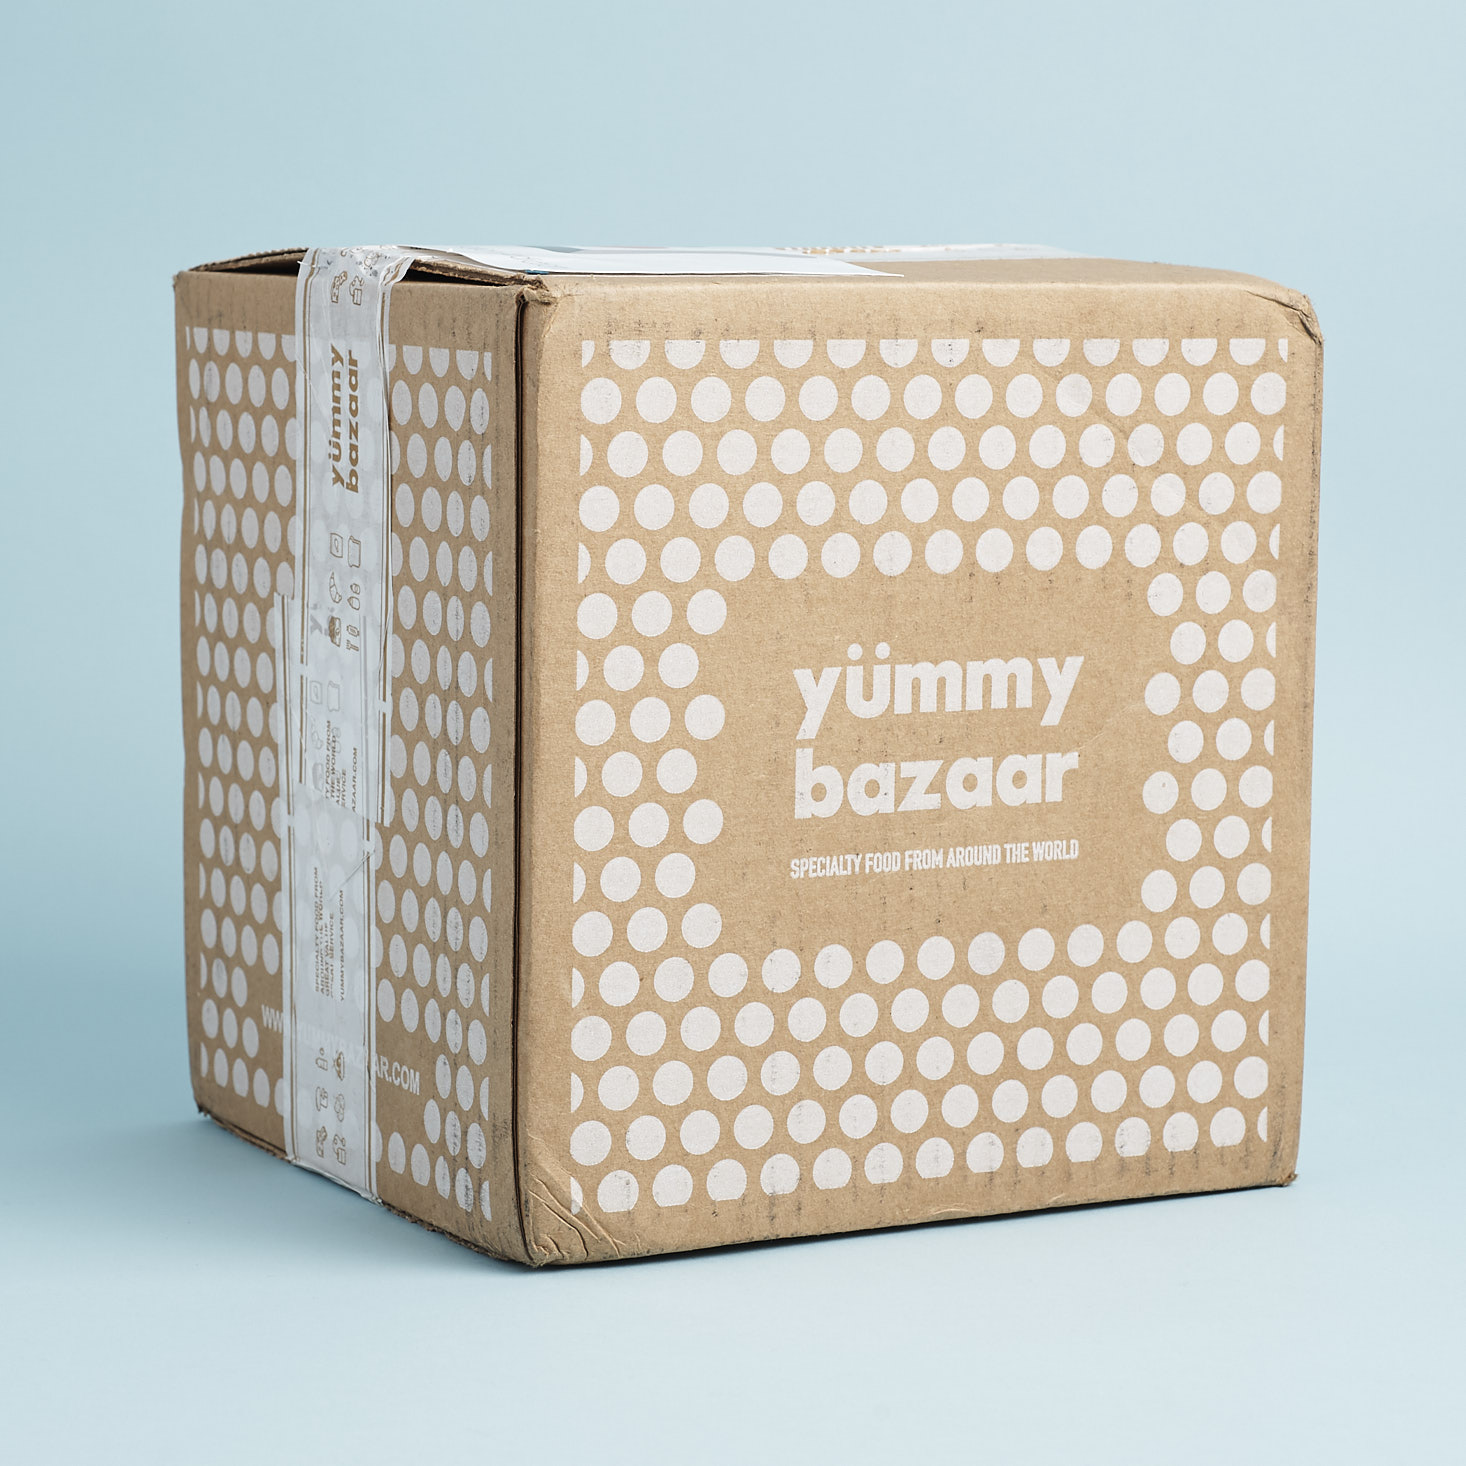 Yummy Bazaar Full Experience Gourmet Box Review – January 2018